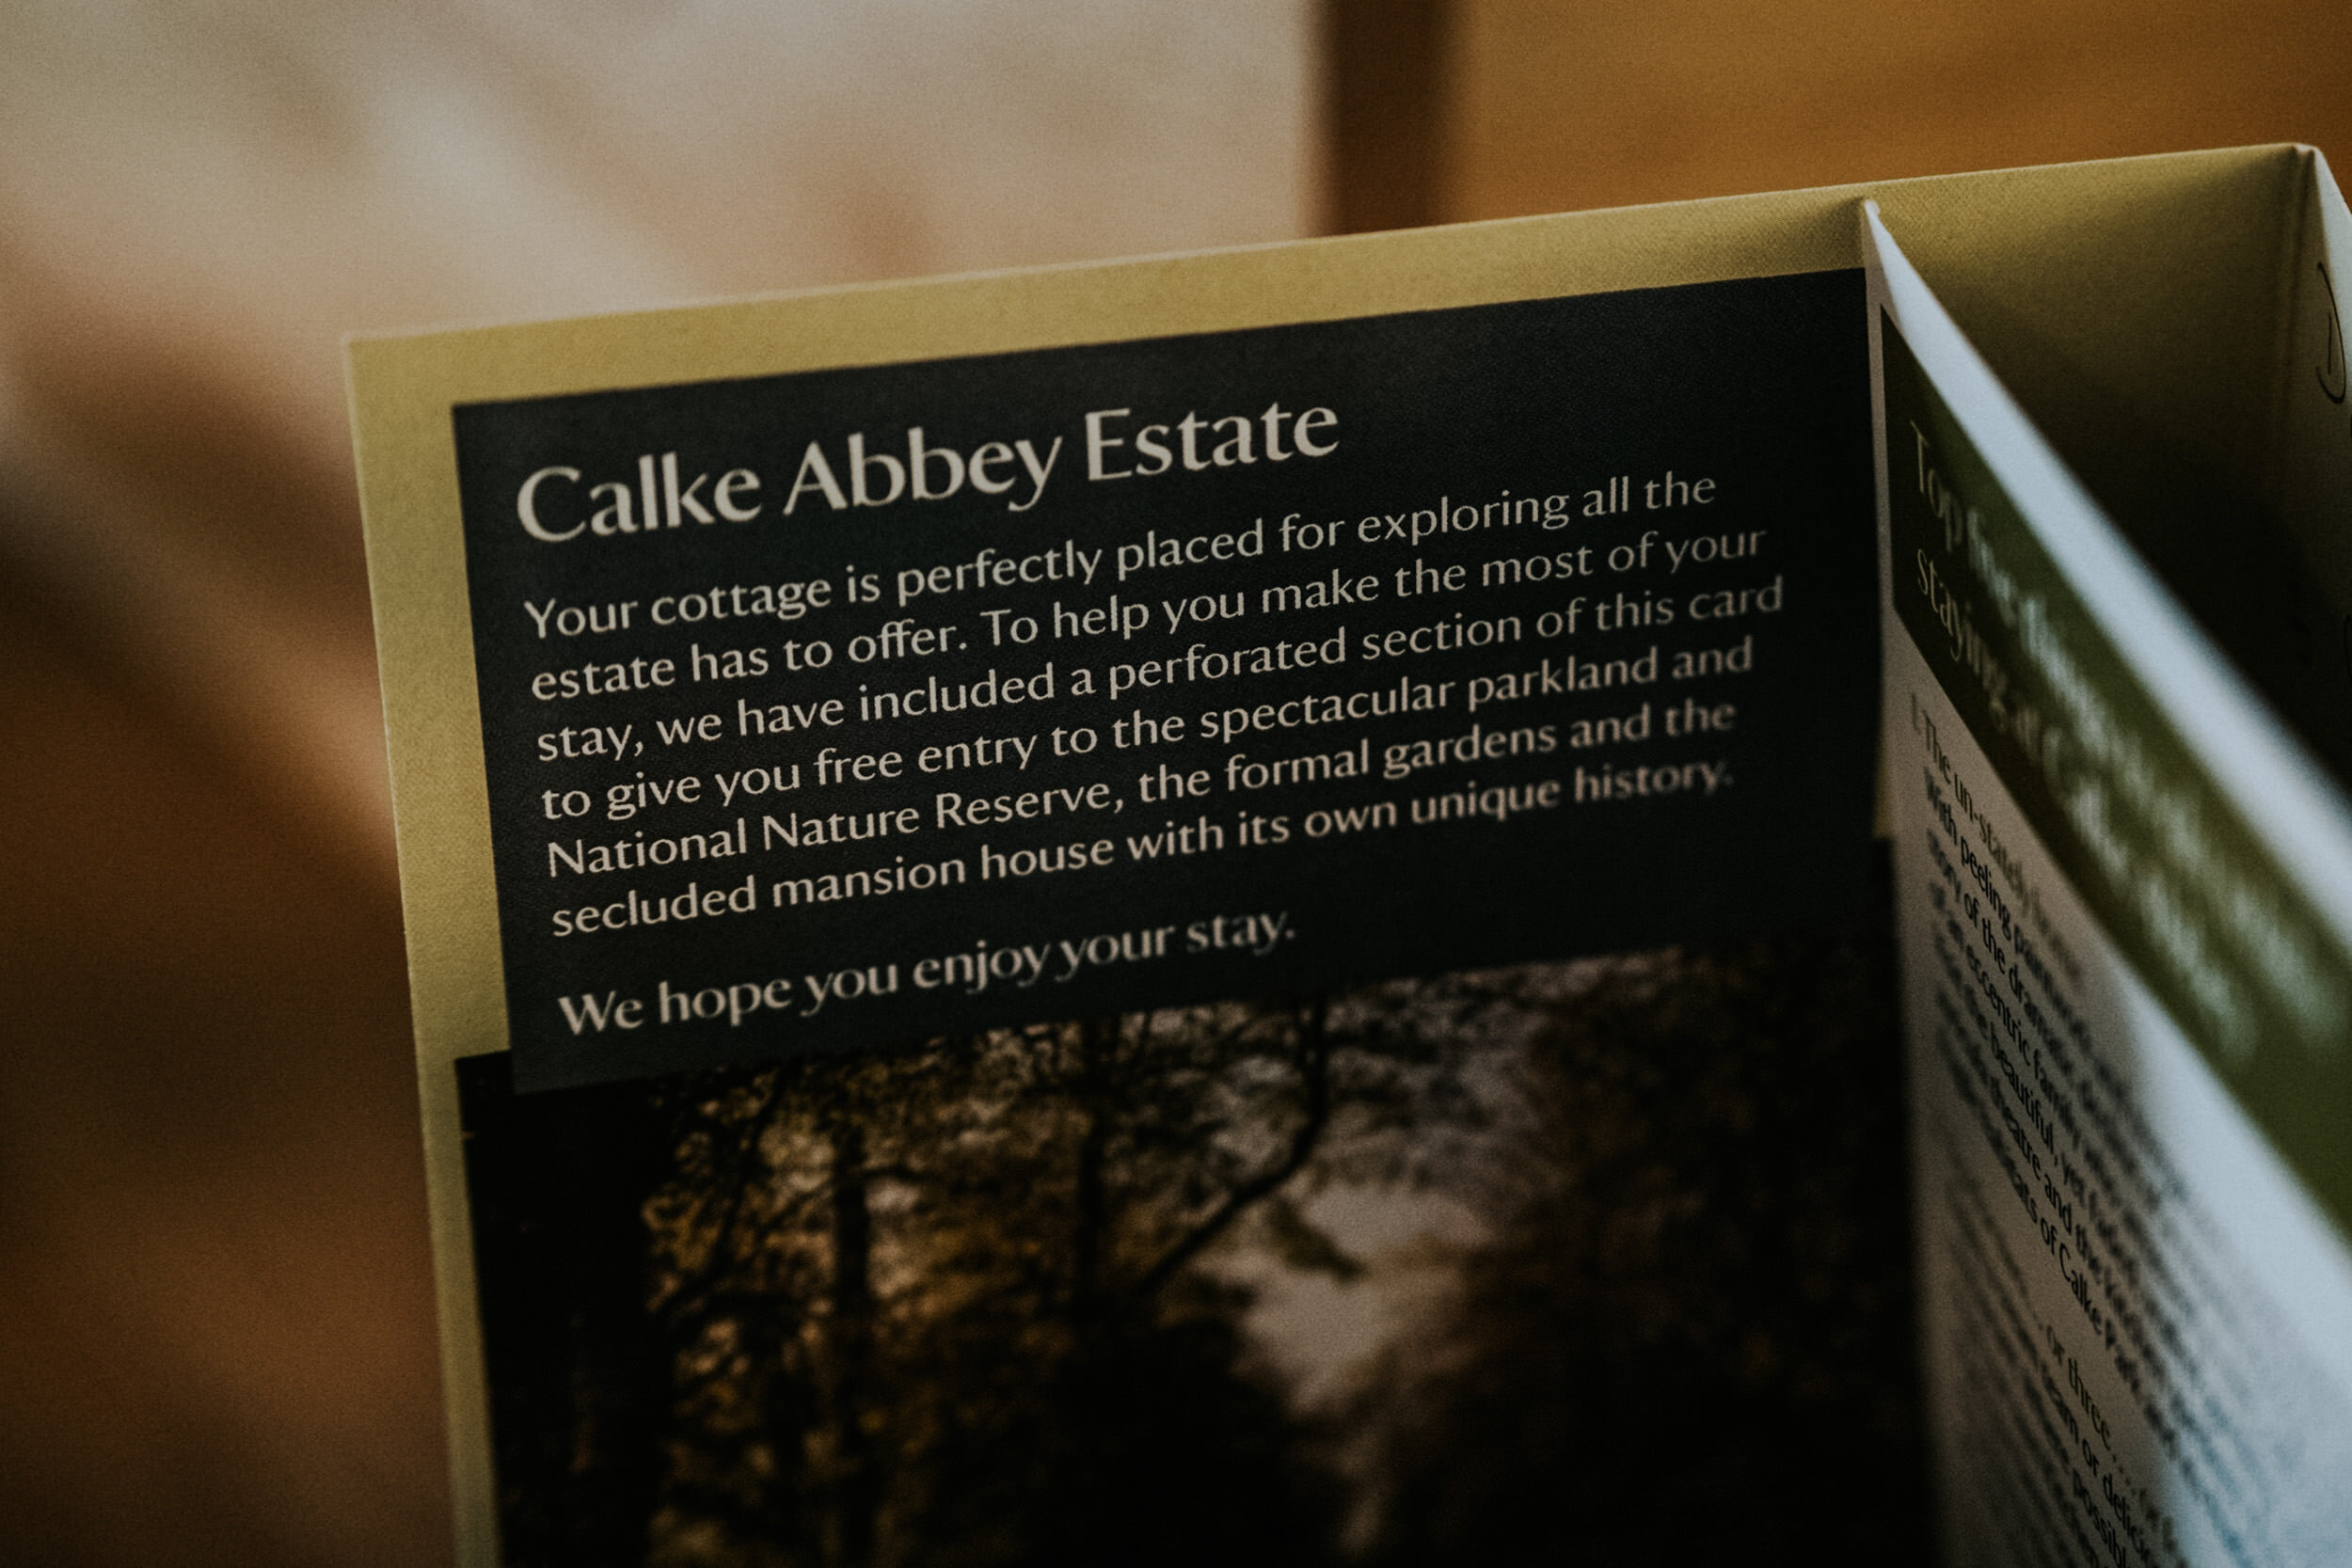 the-riding-school-calke-abbey-derbyshire-edgy-luxury-alternative-documentary-wedding-photographer-2500px_100014.jpg